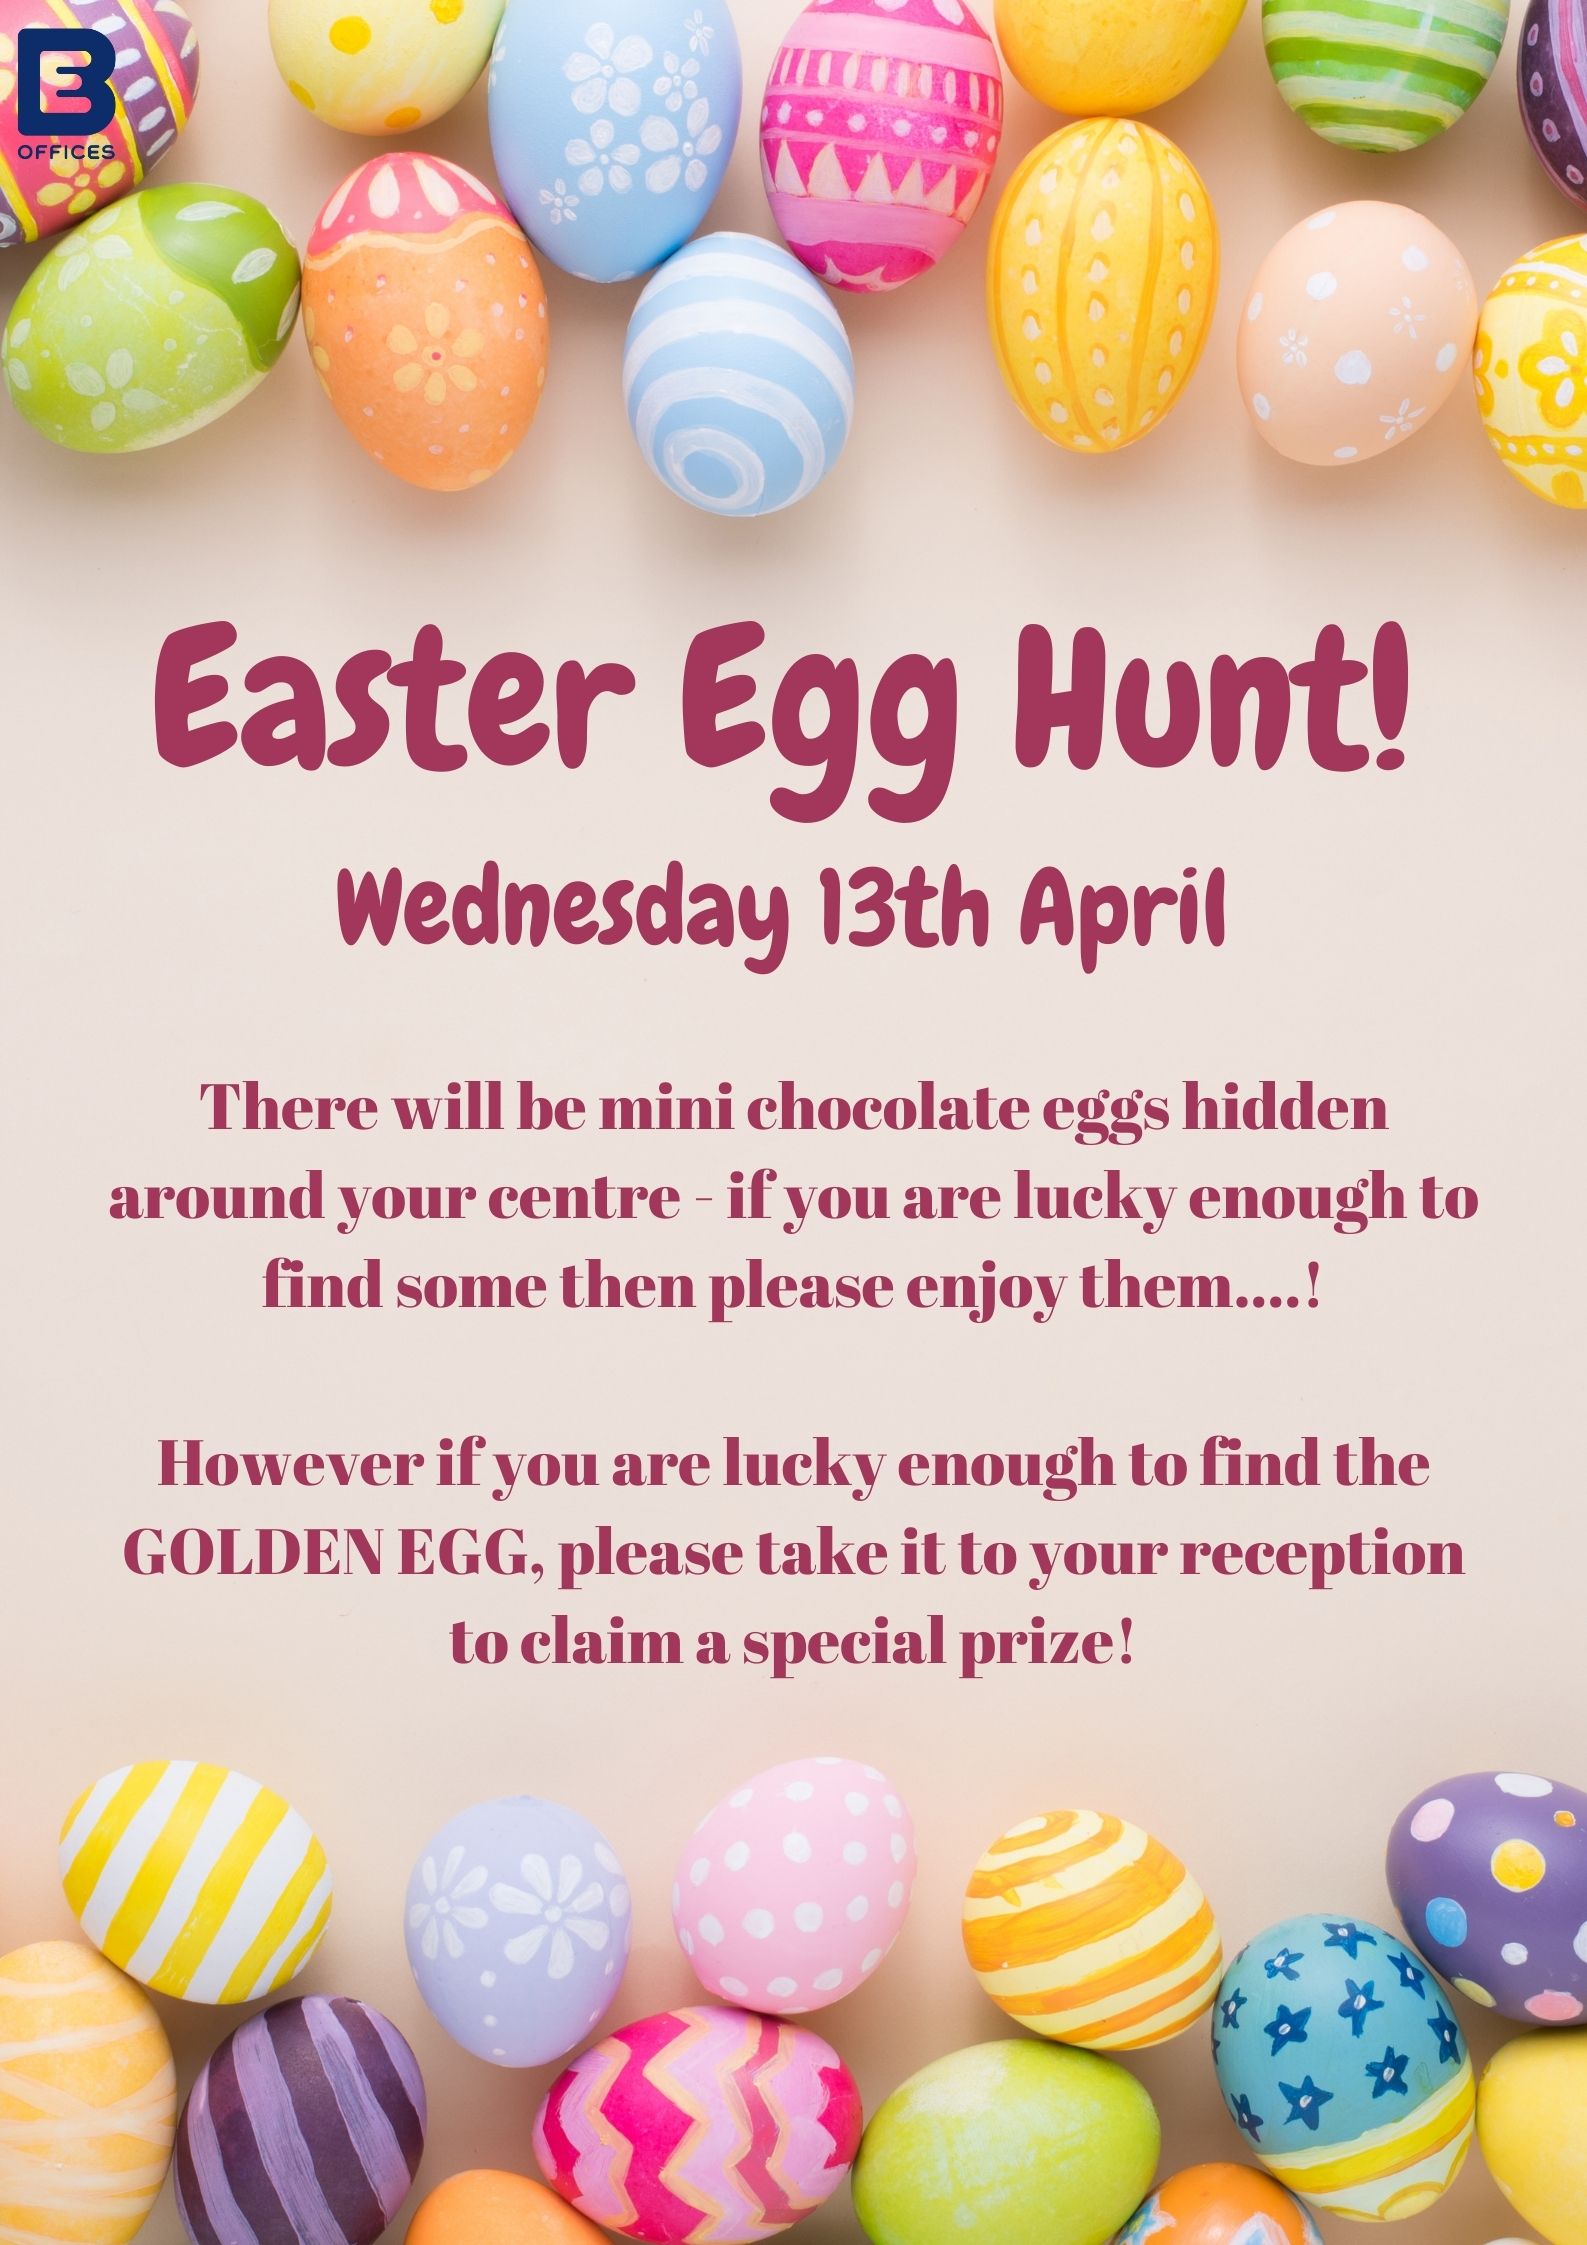 BE Easter Egg Hunt!